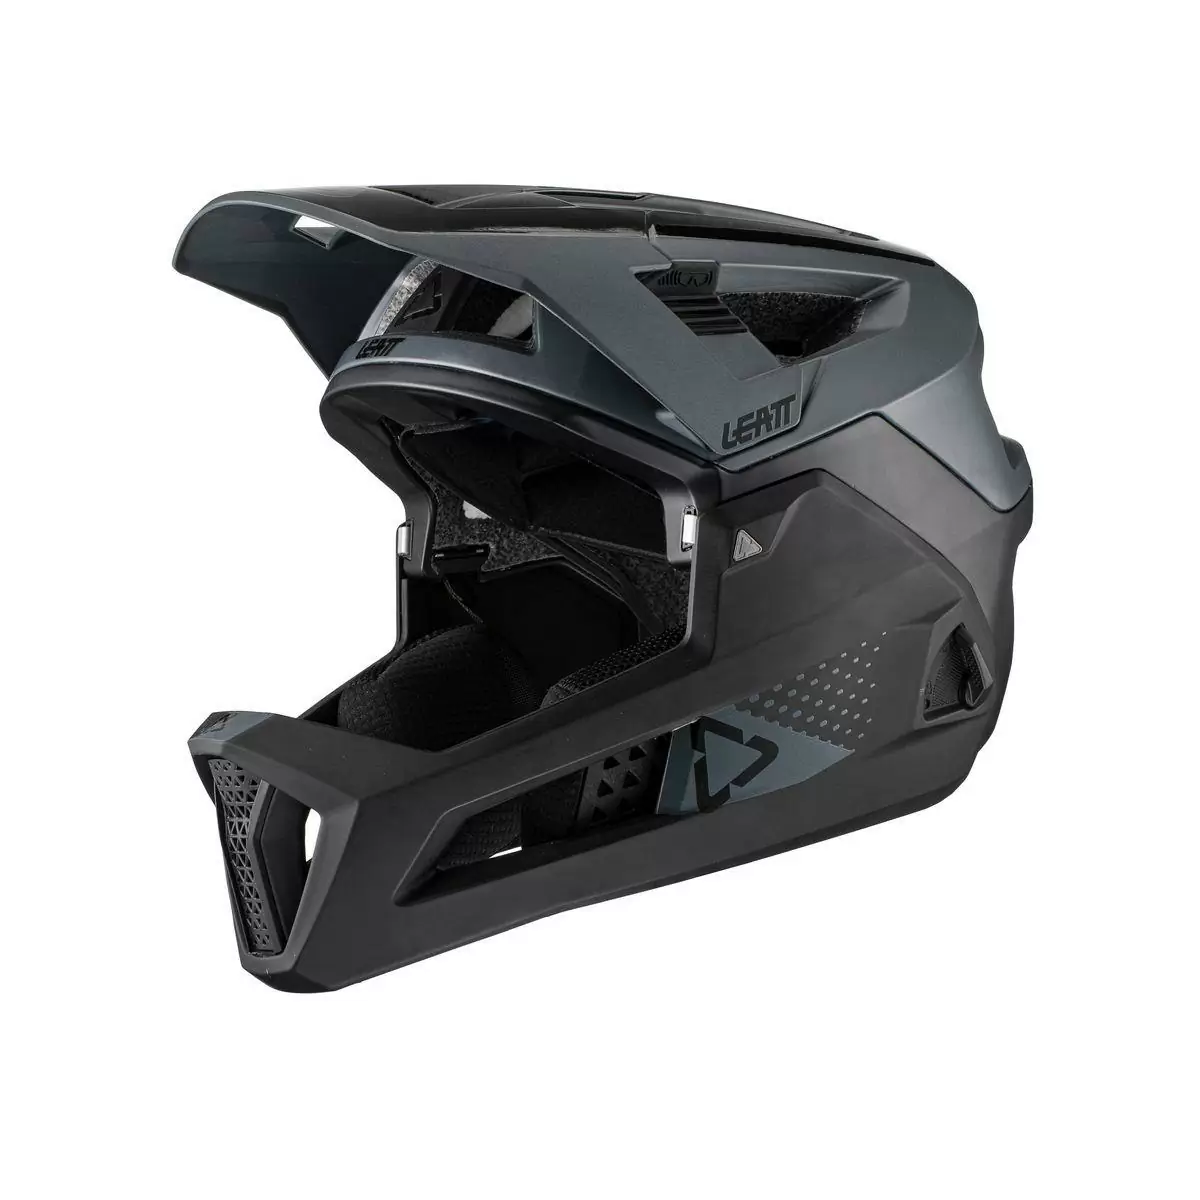 Full-Face Helmet MTB 4.0 Enduro Removable Chinguard Black/Grey Size S (51-55cm) - image